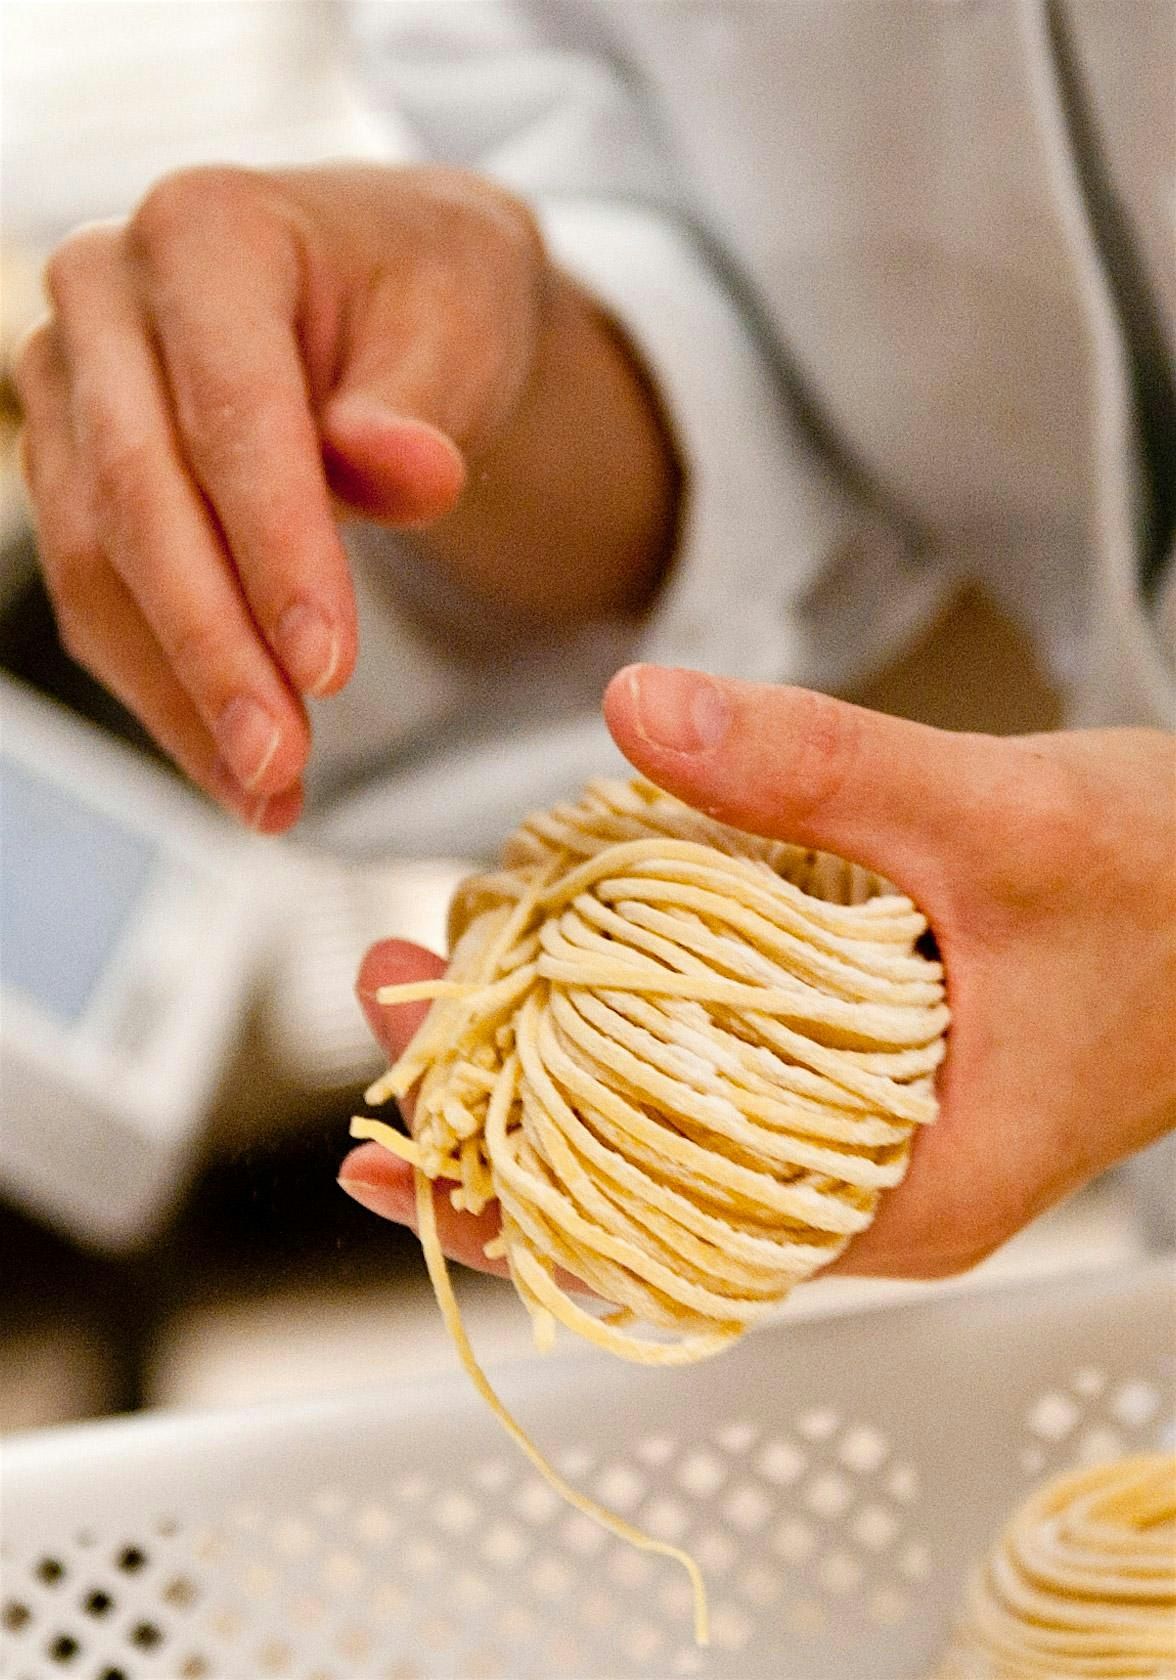 Hands-On Fresh Pasta-Making 101 Workshop at 3:30pm